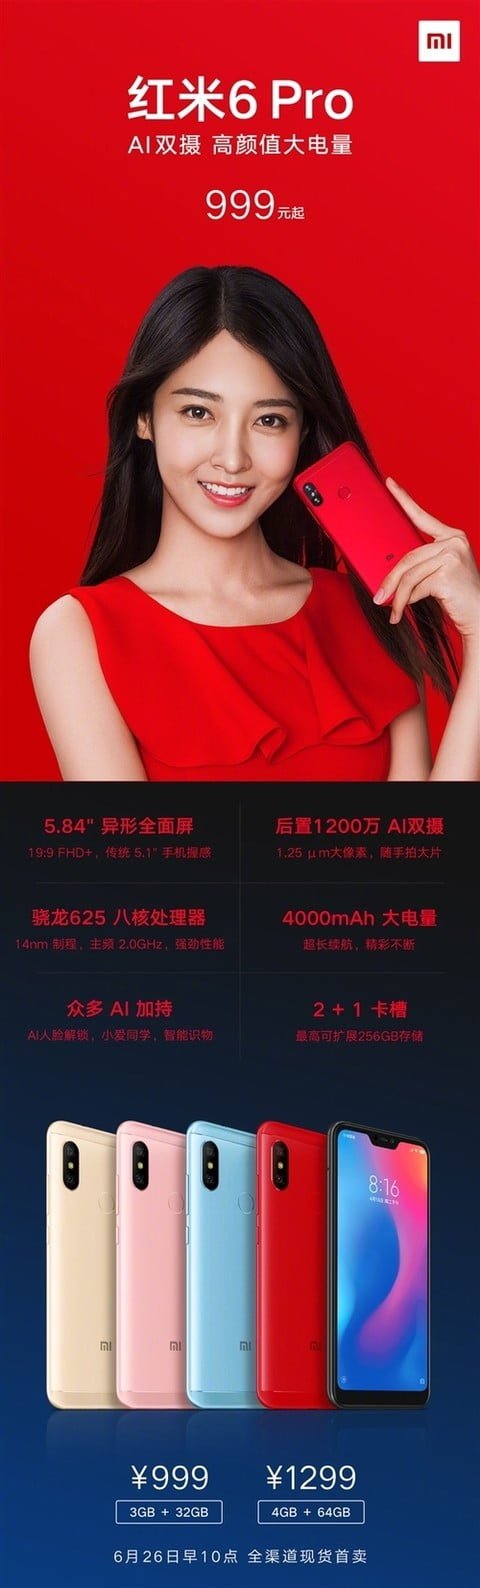 xiaomi redmi 6 pro official listing